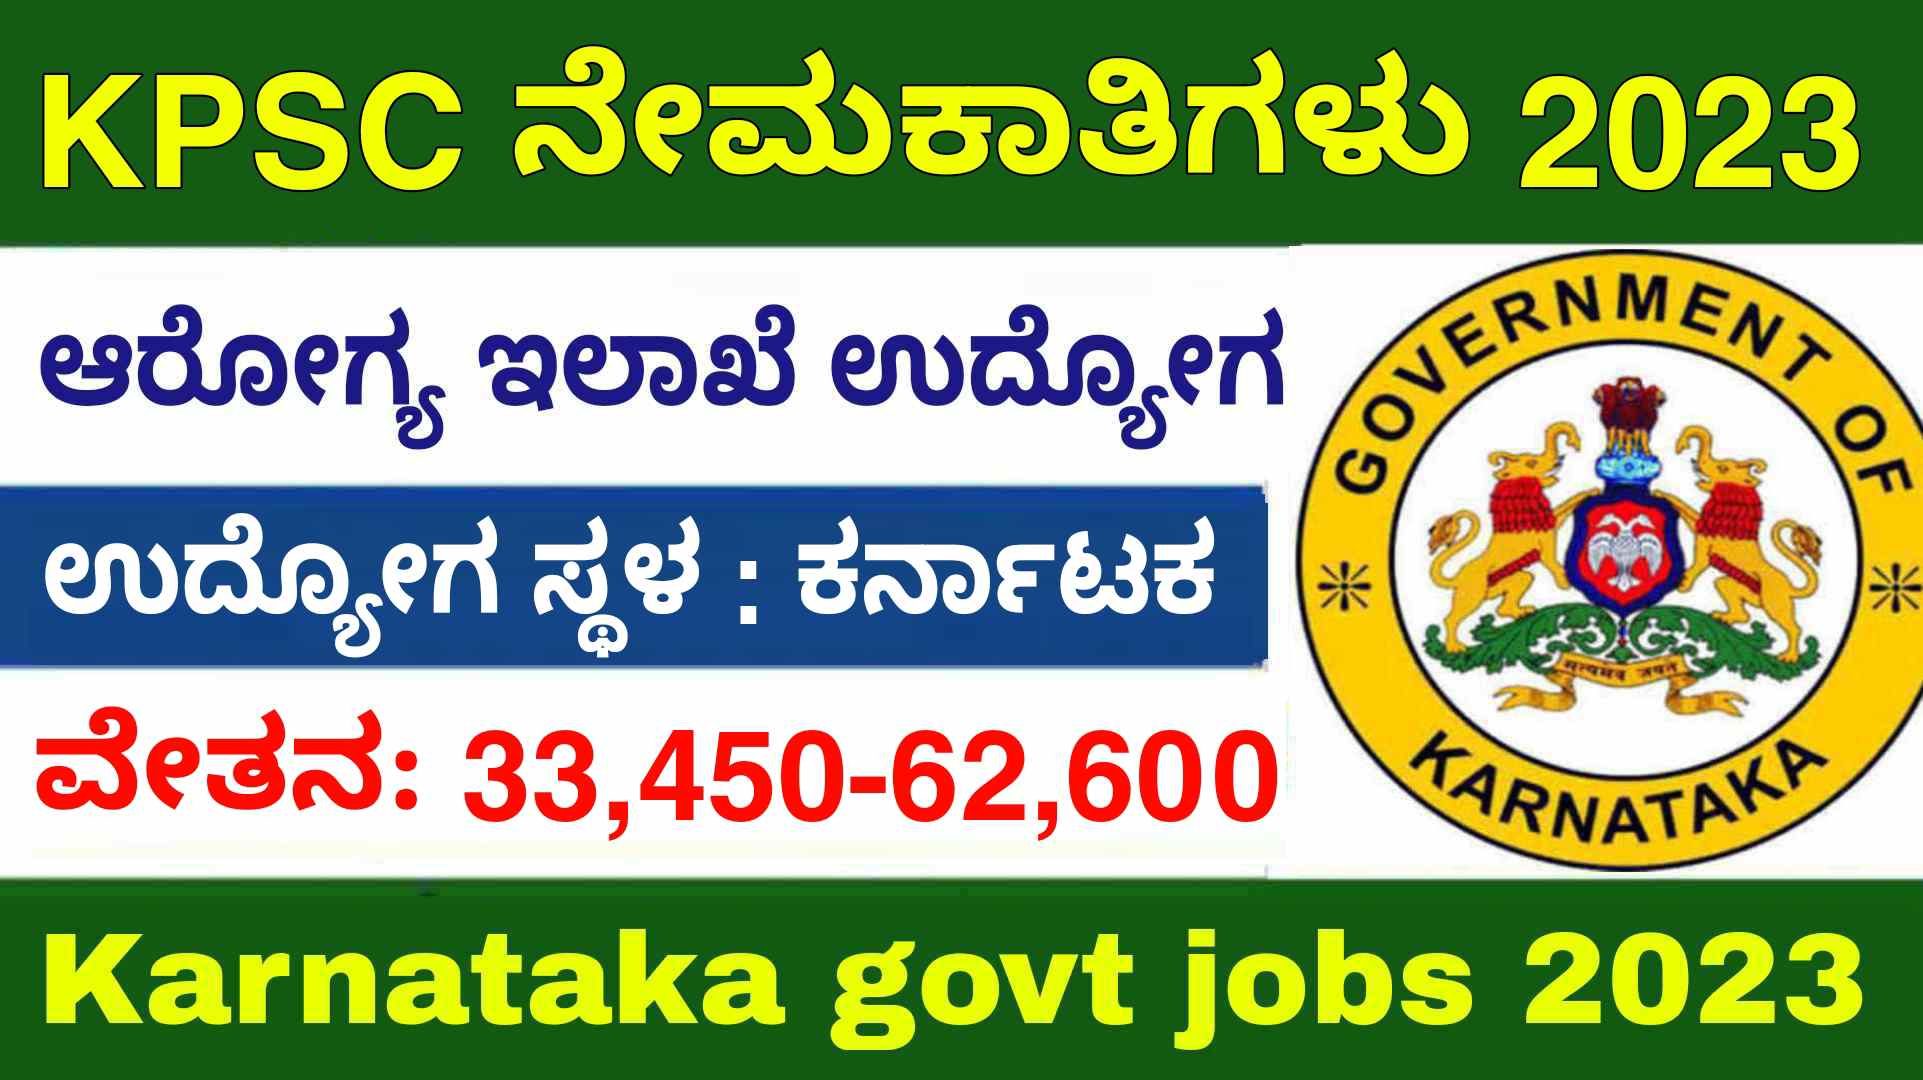 kpsc karnataka recruitment 2023